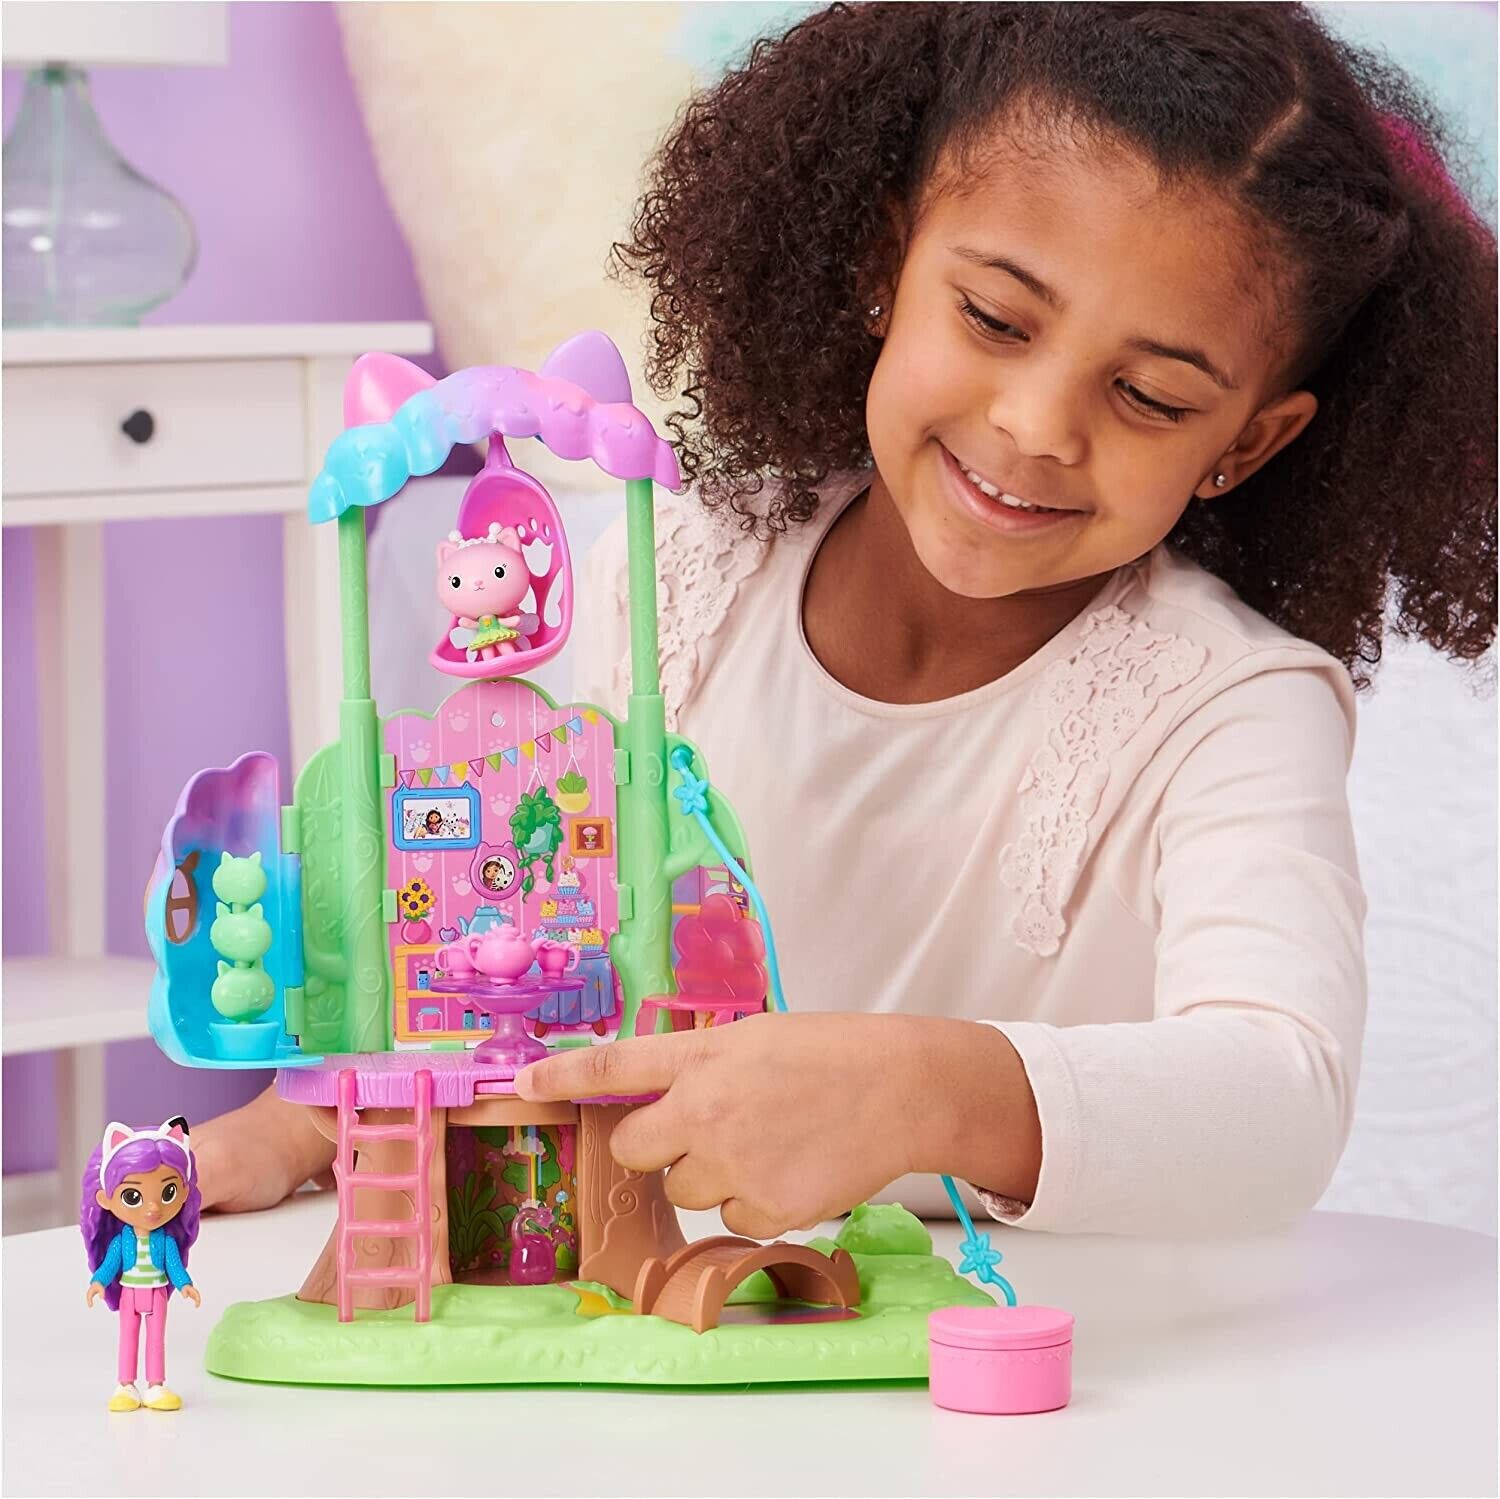 Kitty Fairy's Garden TreehouseGabby's Dollhouse Playset-Limited stock